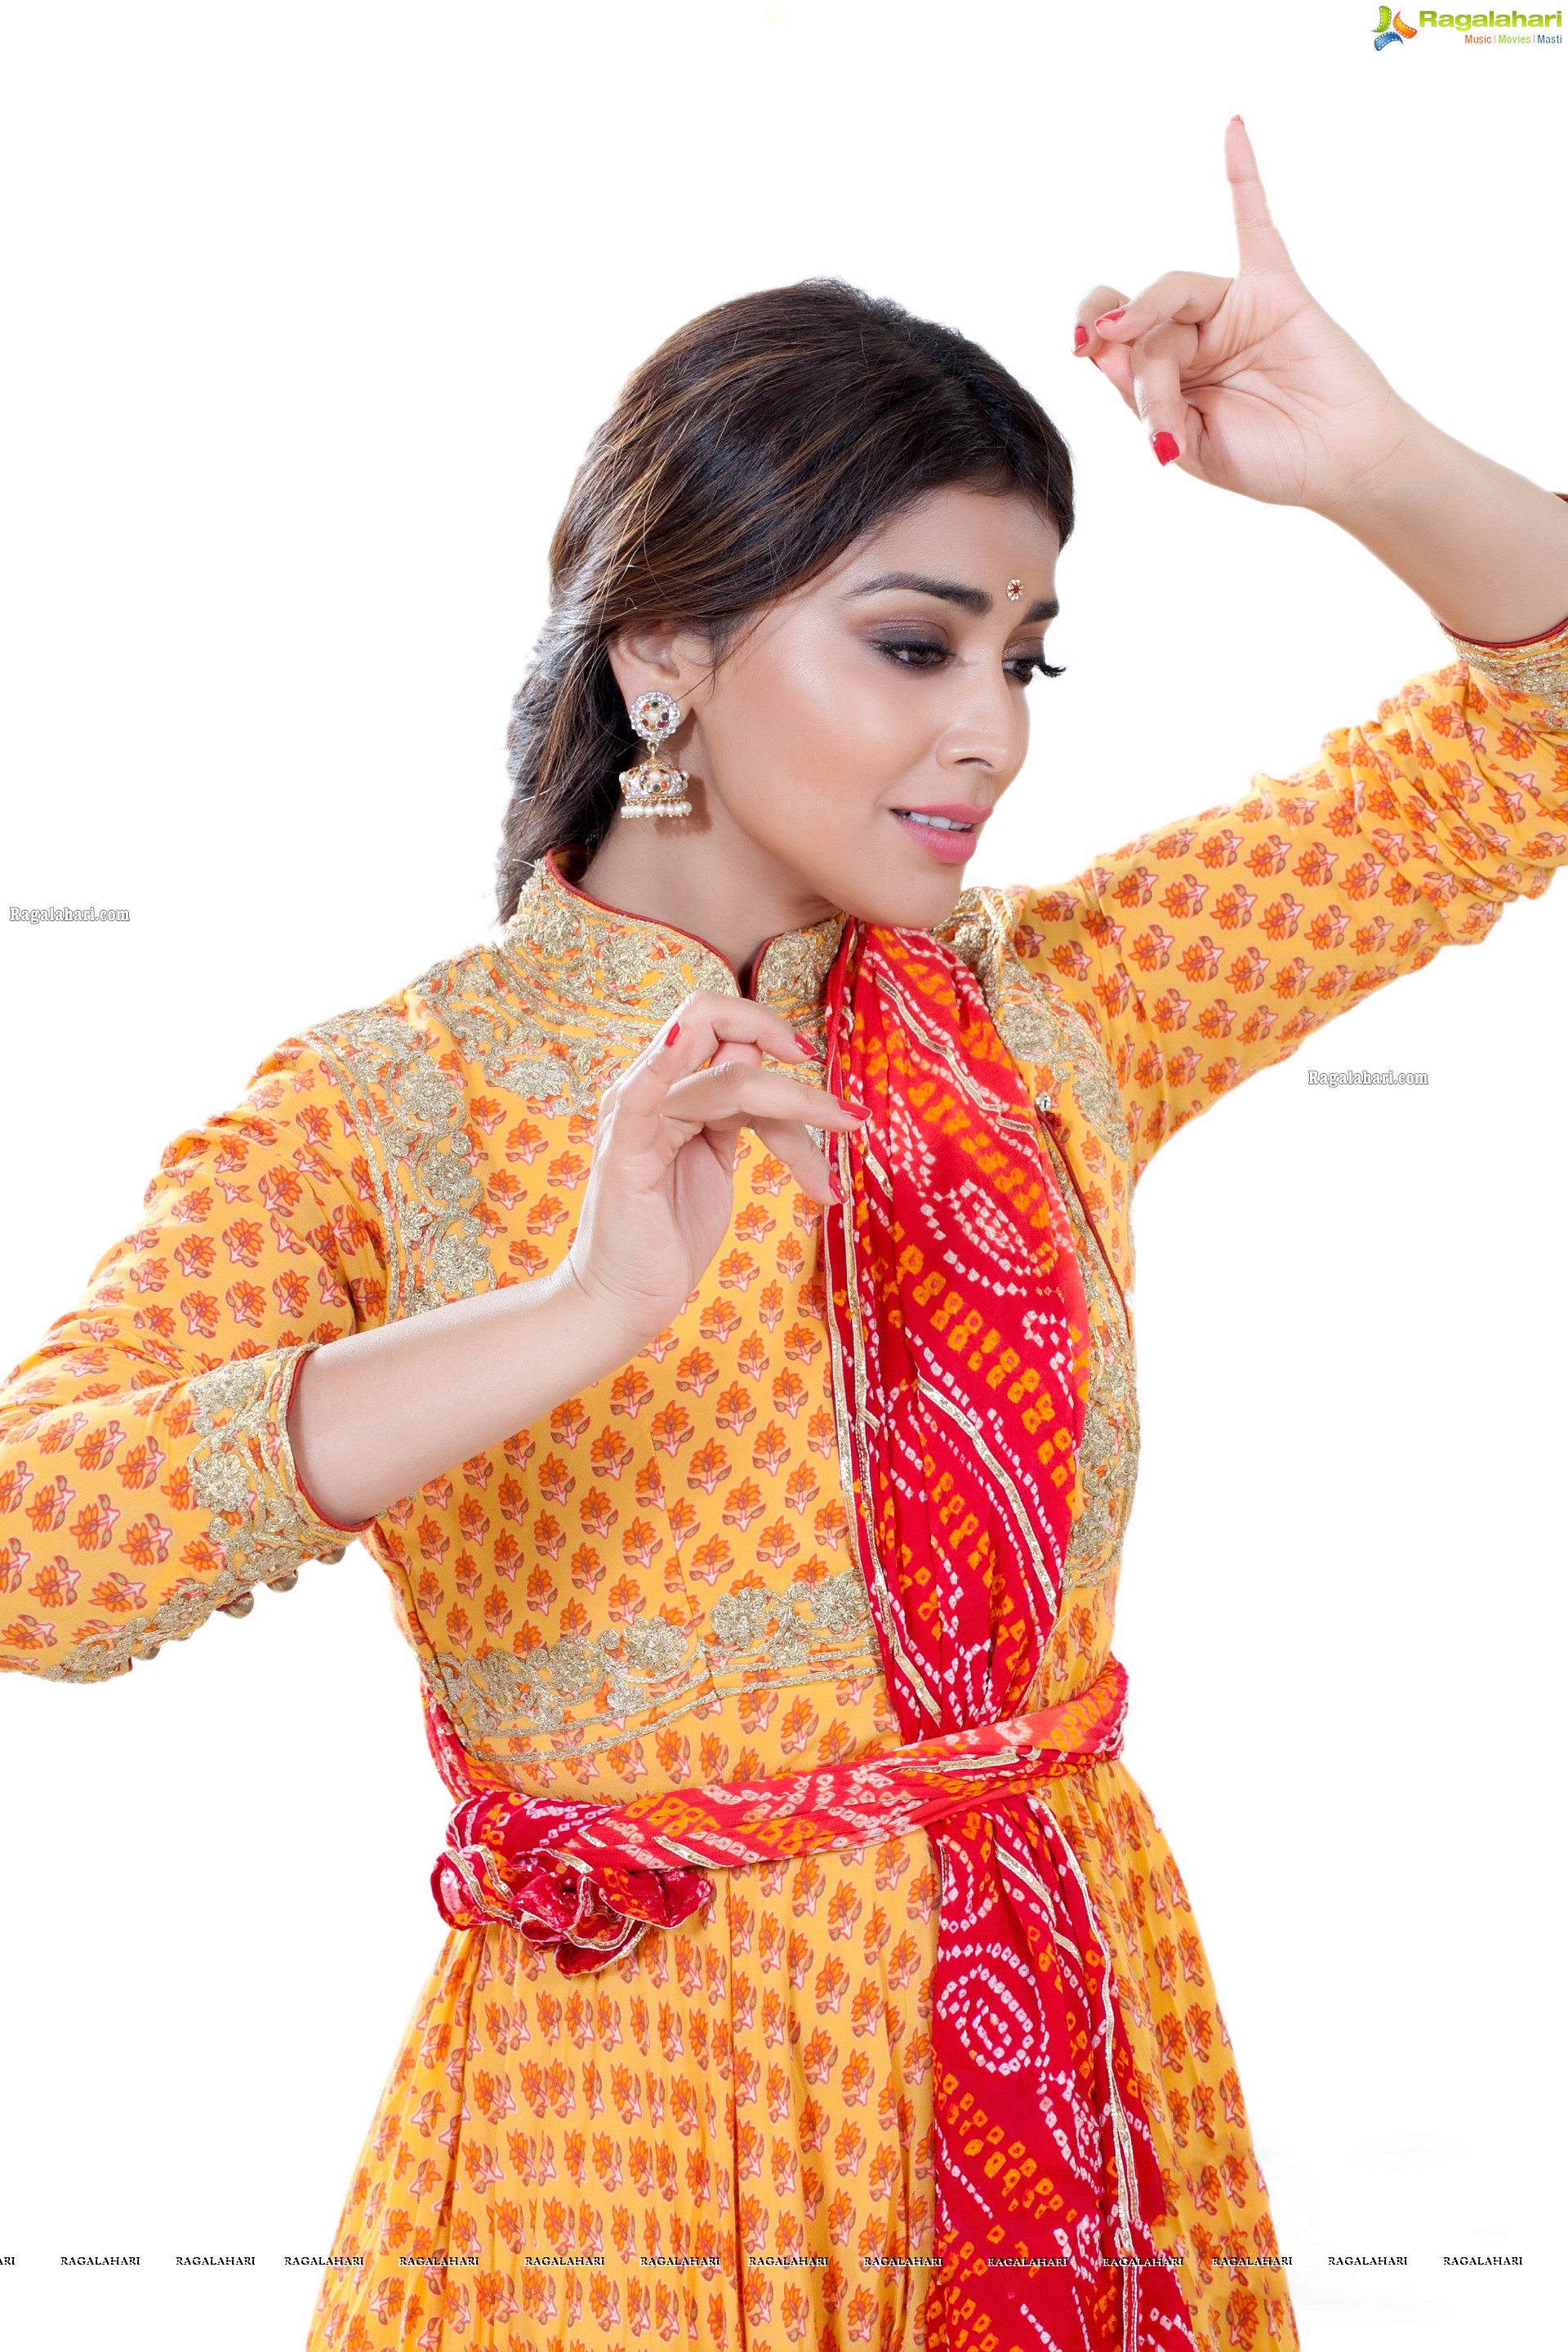 Shriya Saran in Dance Poses Adorning a Yellow Churidar